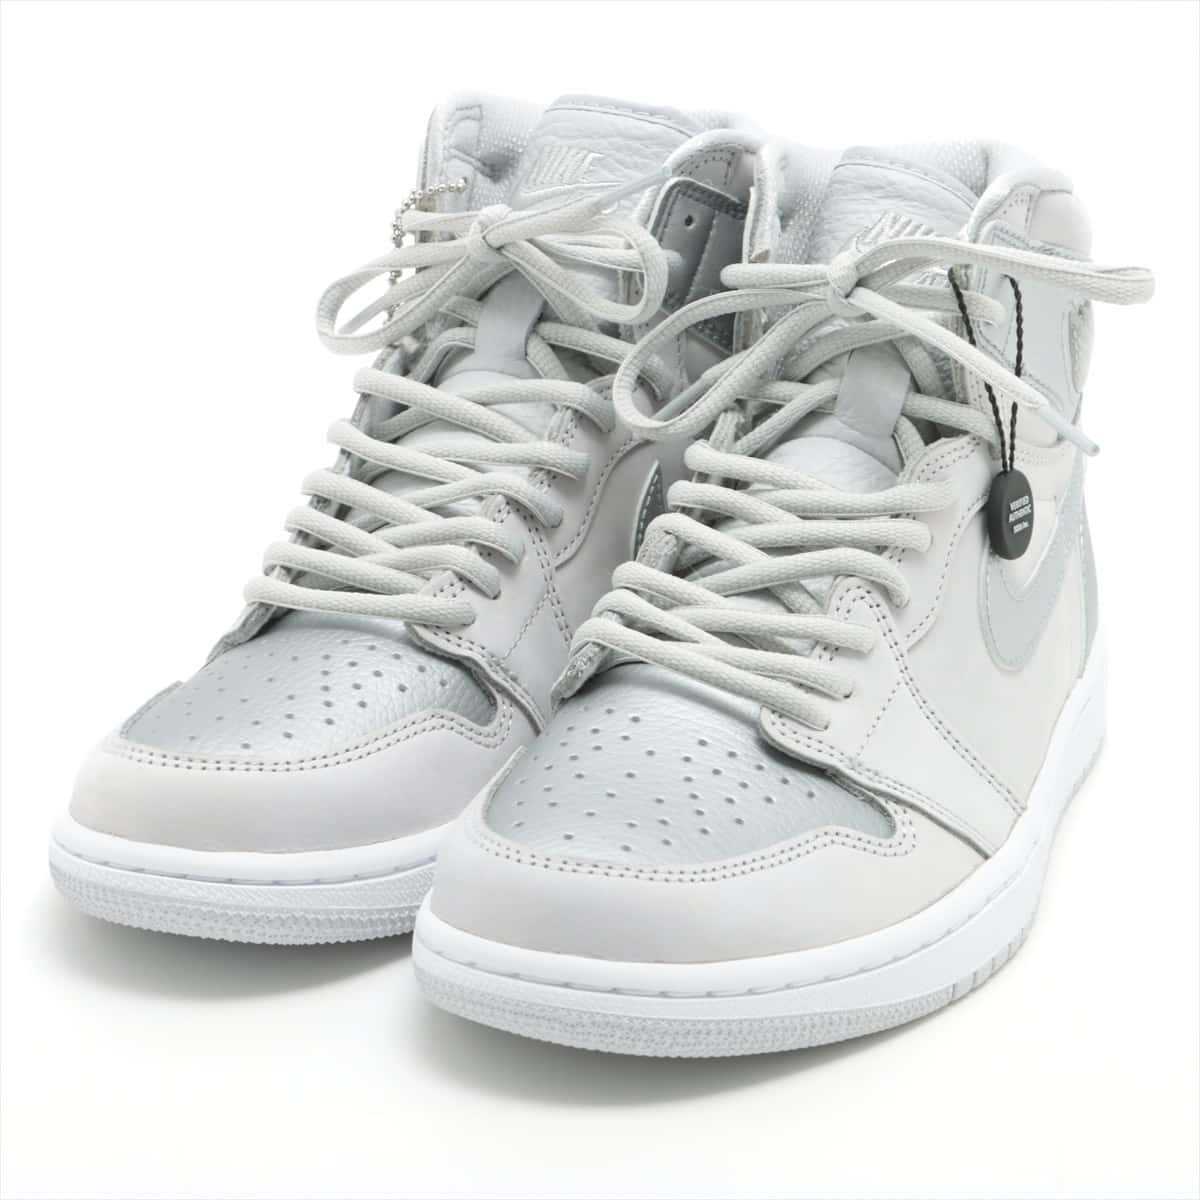 Nike Leather High-top Sneakers 26.5cm Men's Silver AIR JORDAN 1 HIGH OG 2020 CO.JP DA0382-029 With duralumin case